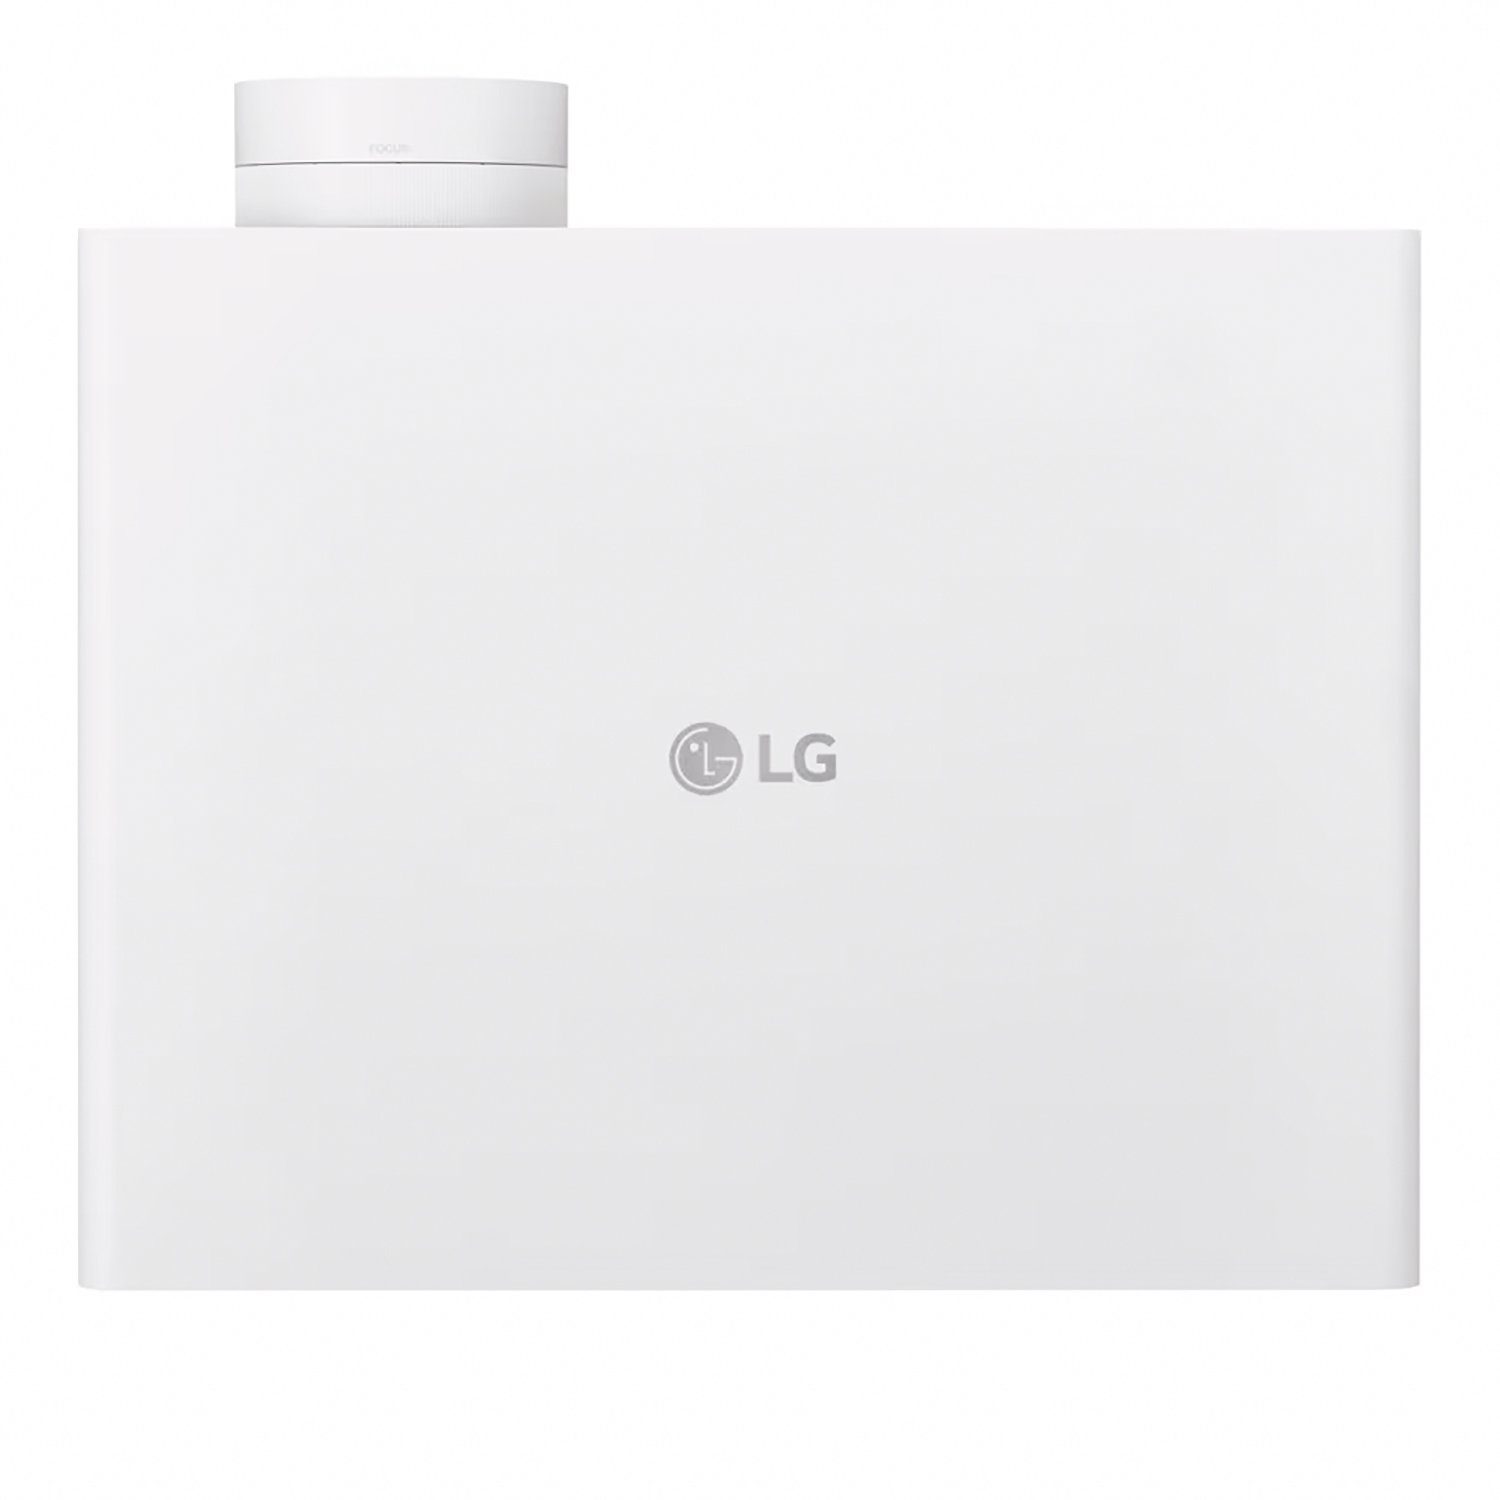 LG ProBeam BU53RG 3000000:1, x Beamer 2160 (5000 lm, 3840 px)